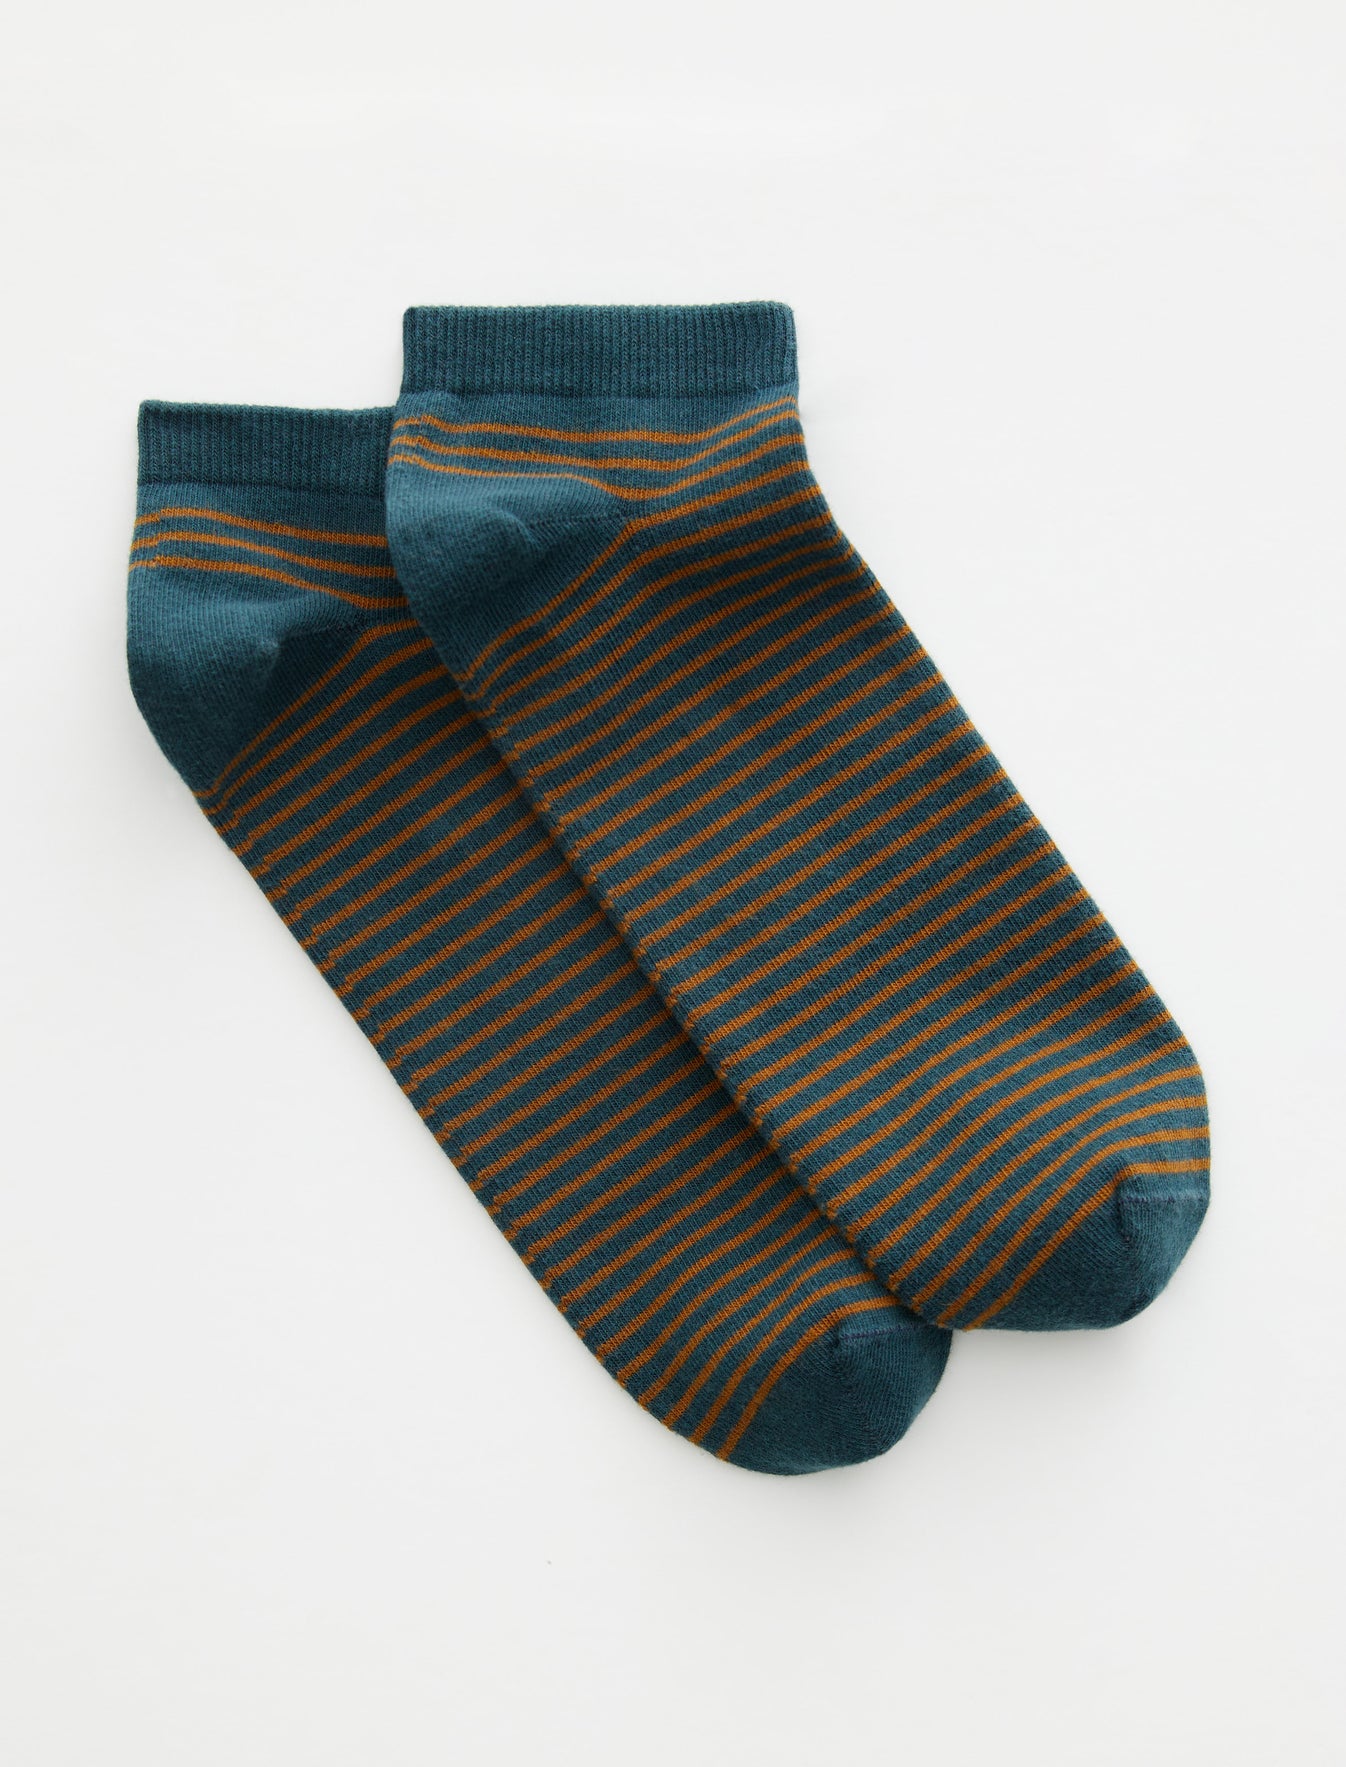 Ankle Sock 1 Stripe Gold Green Multi Unisex Accsry Photo 1